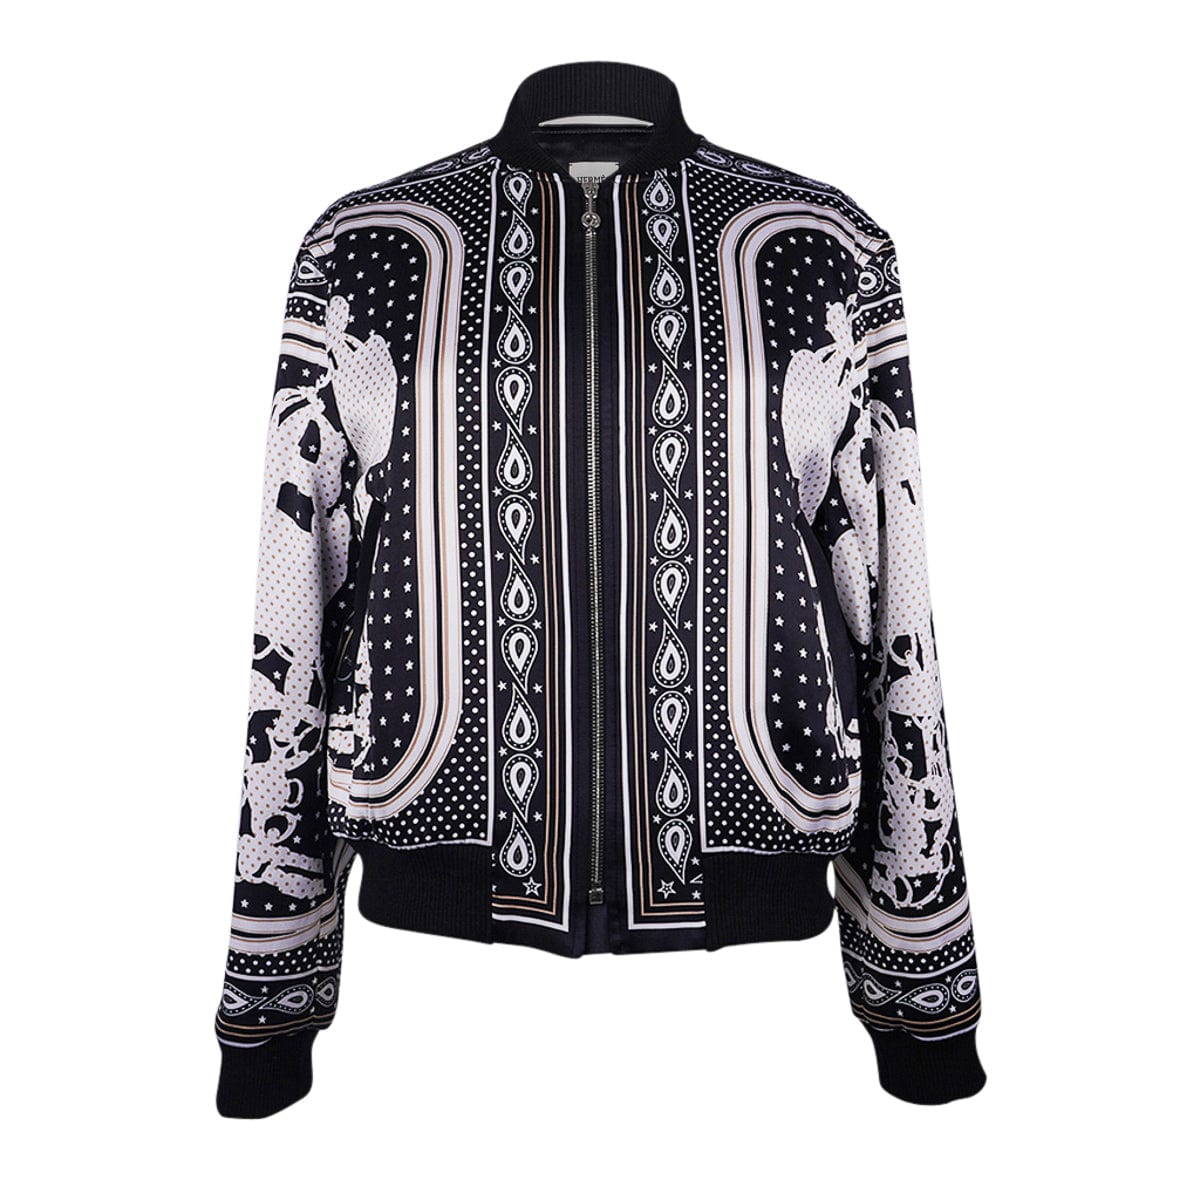 Designer Outerwear, Jackets, Coats & Ponchos